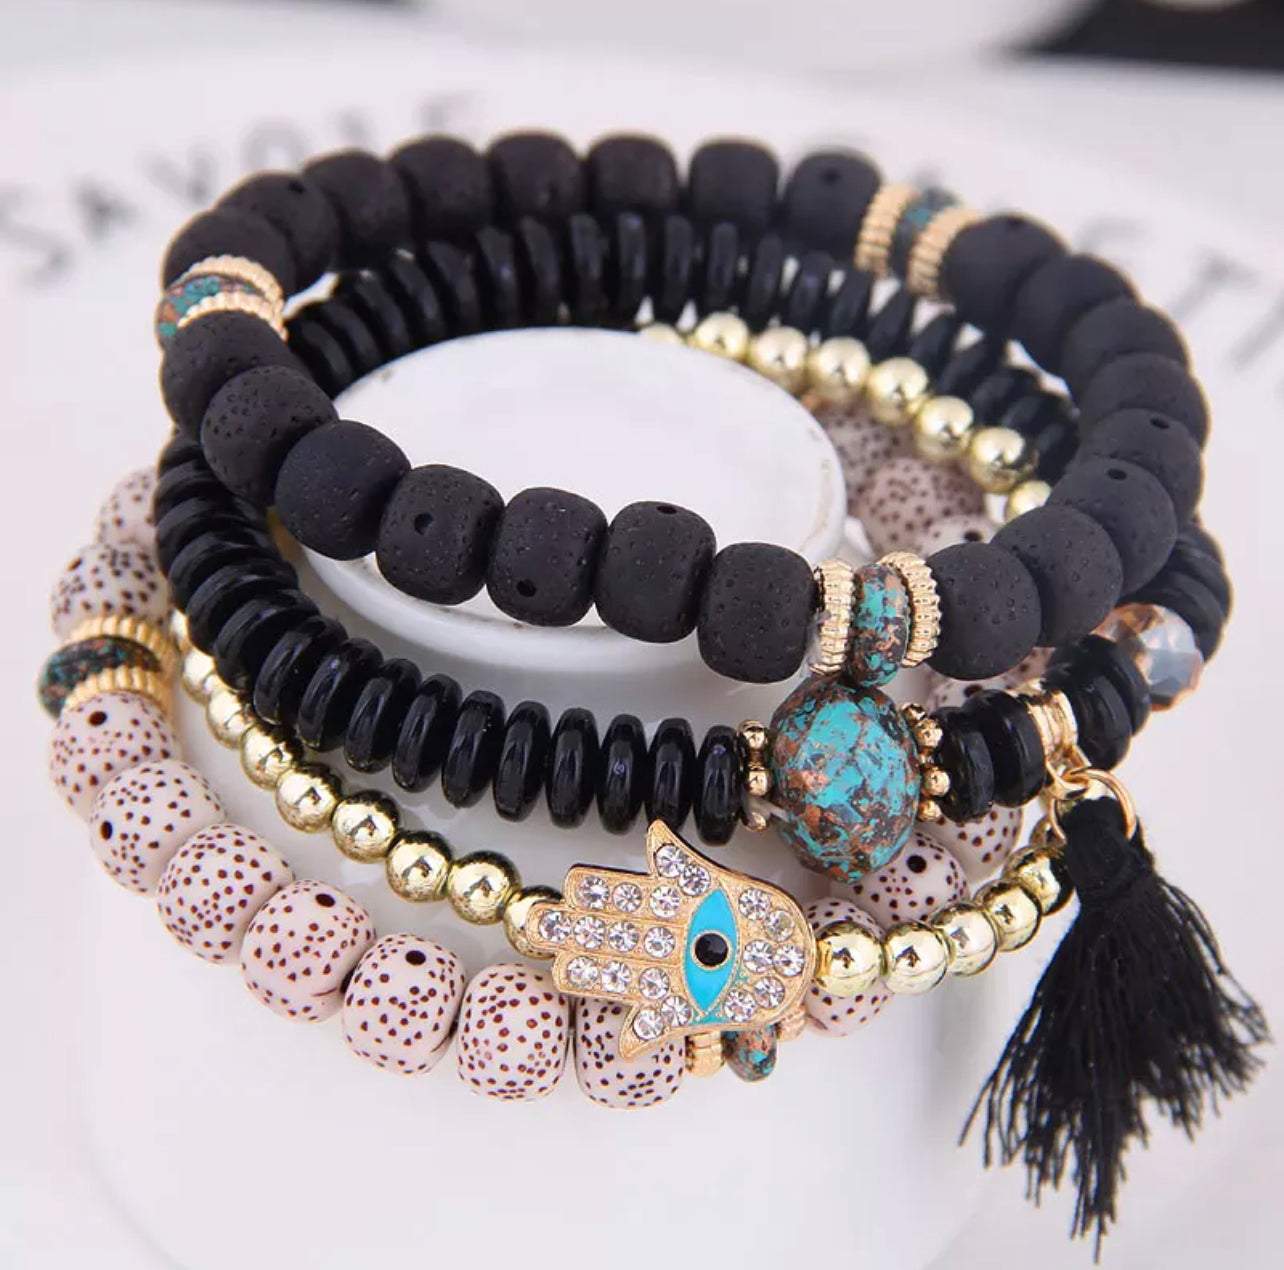 7 Chakra Healing Bead Bracelets With Hamsa Hand And Evil Eye Pendant  Spiritual Crystal Beaded Bracelet Made of 7 Real & Natural Gemstones